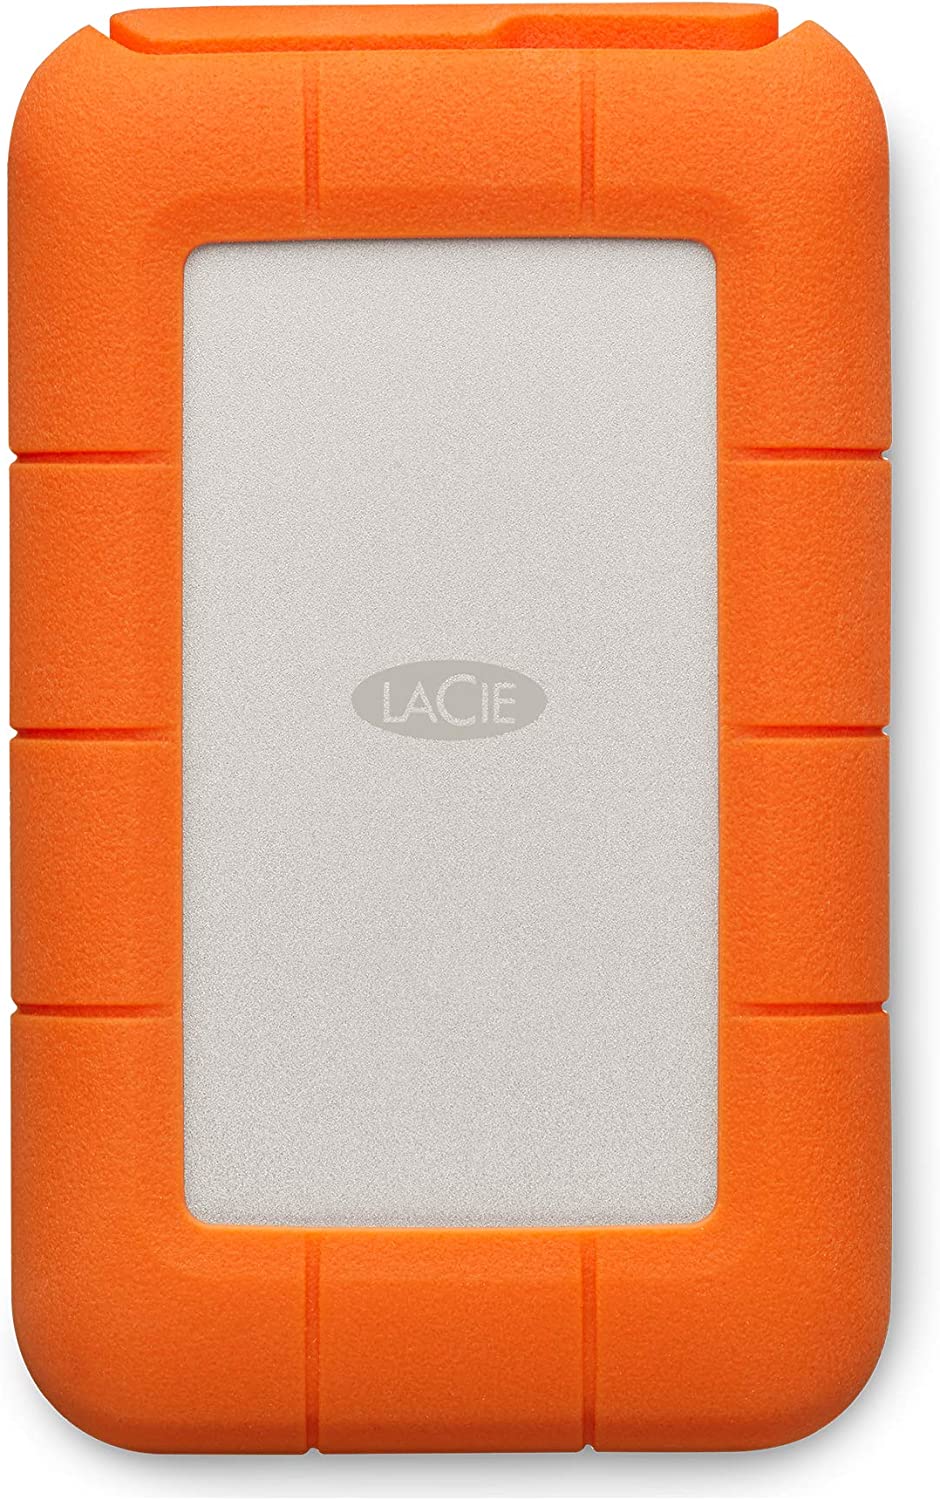 LaCie Rugged Mini 2TB External Hard Drive Portable HDD - USB 3.0 USB 2.0 Compatible, Drop Shock Dust Rain Resistant Shuttle Drive, For Mac And PC Computer (LAC9000298), orange